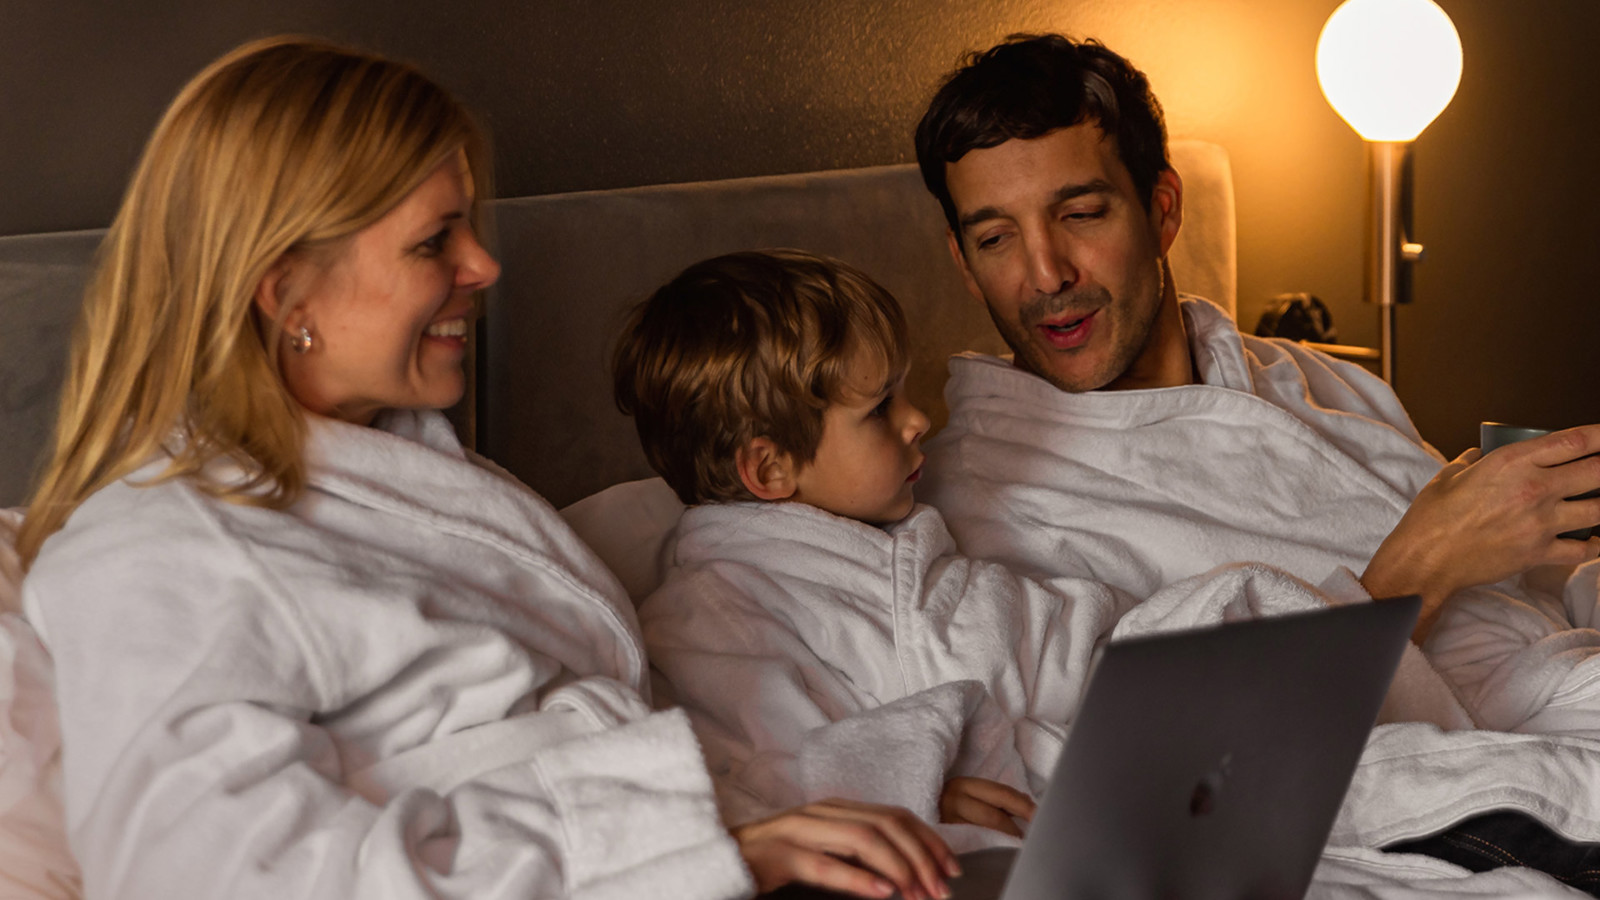 Skrattande familj i hotellsäng på Elite Stadshotellet i Luleå